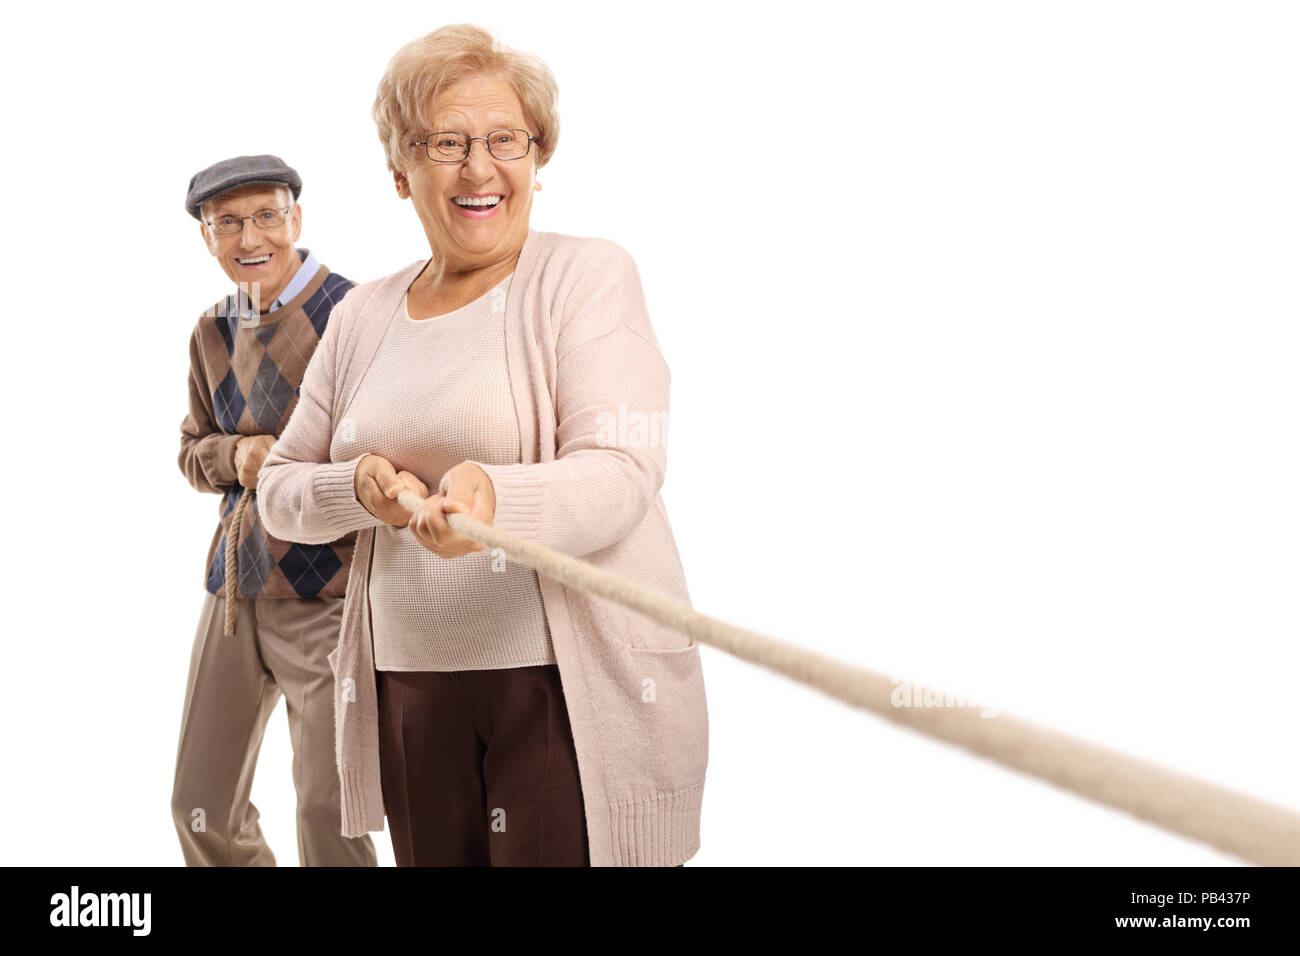 Elderly couple pulling a rope isolated on white background Stock Photo